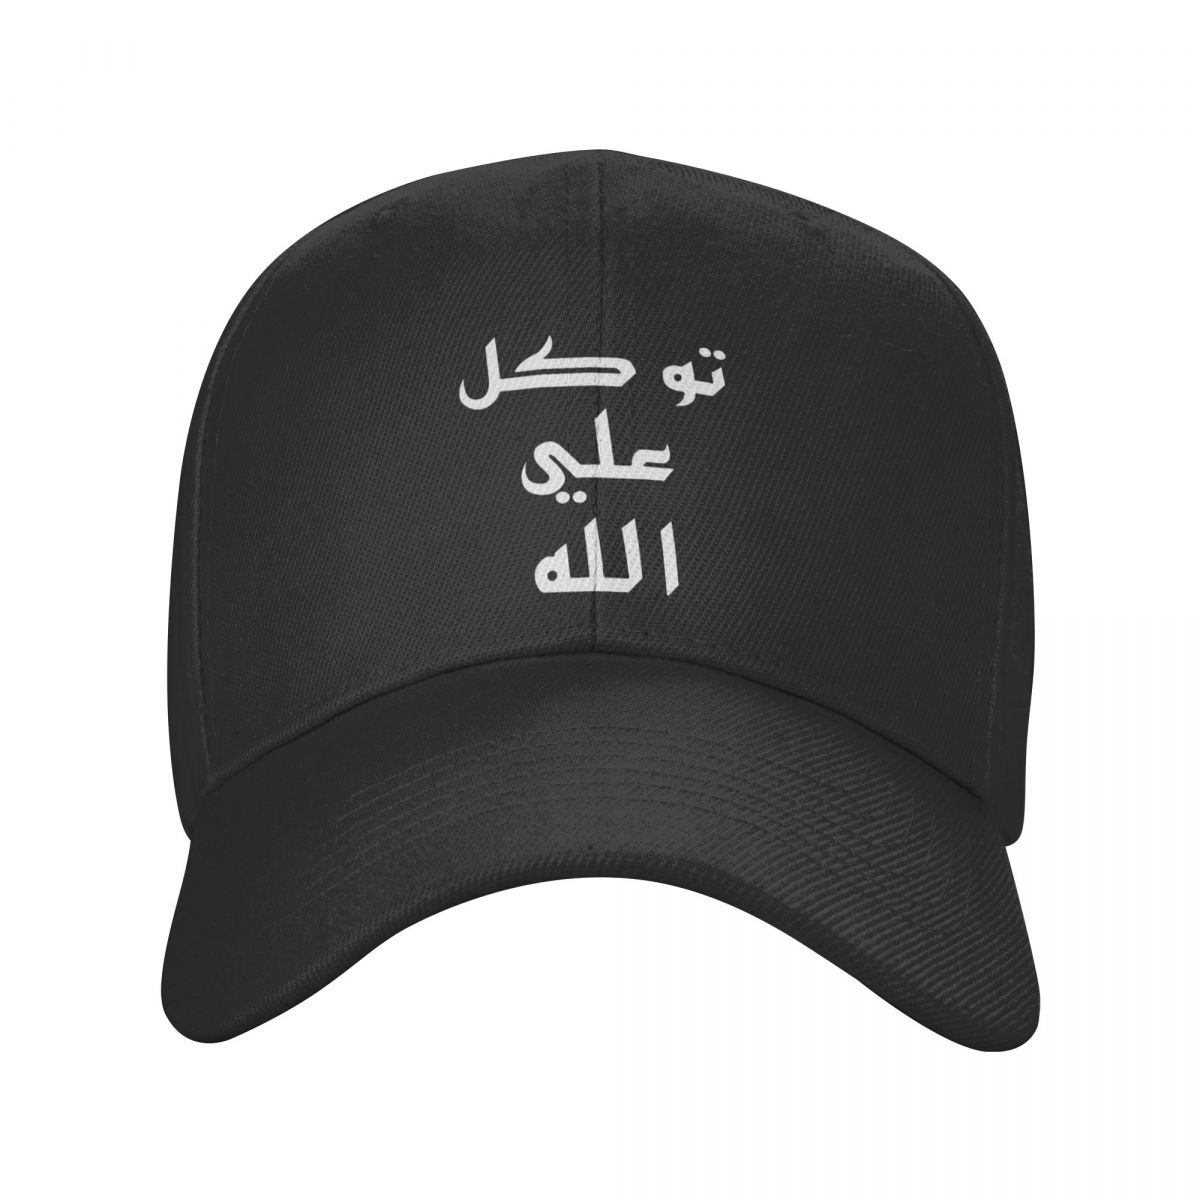 ARABIC ALLAH الله‎ BLACK ISLAM MUSLIM SNAPBACK HAT EMBROIDERED RAPPER CAPS HATS 